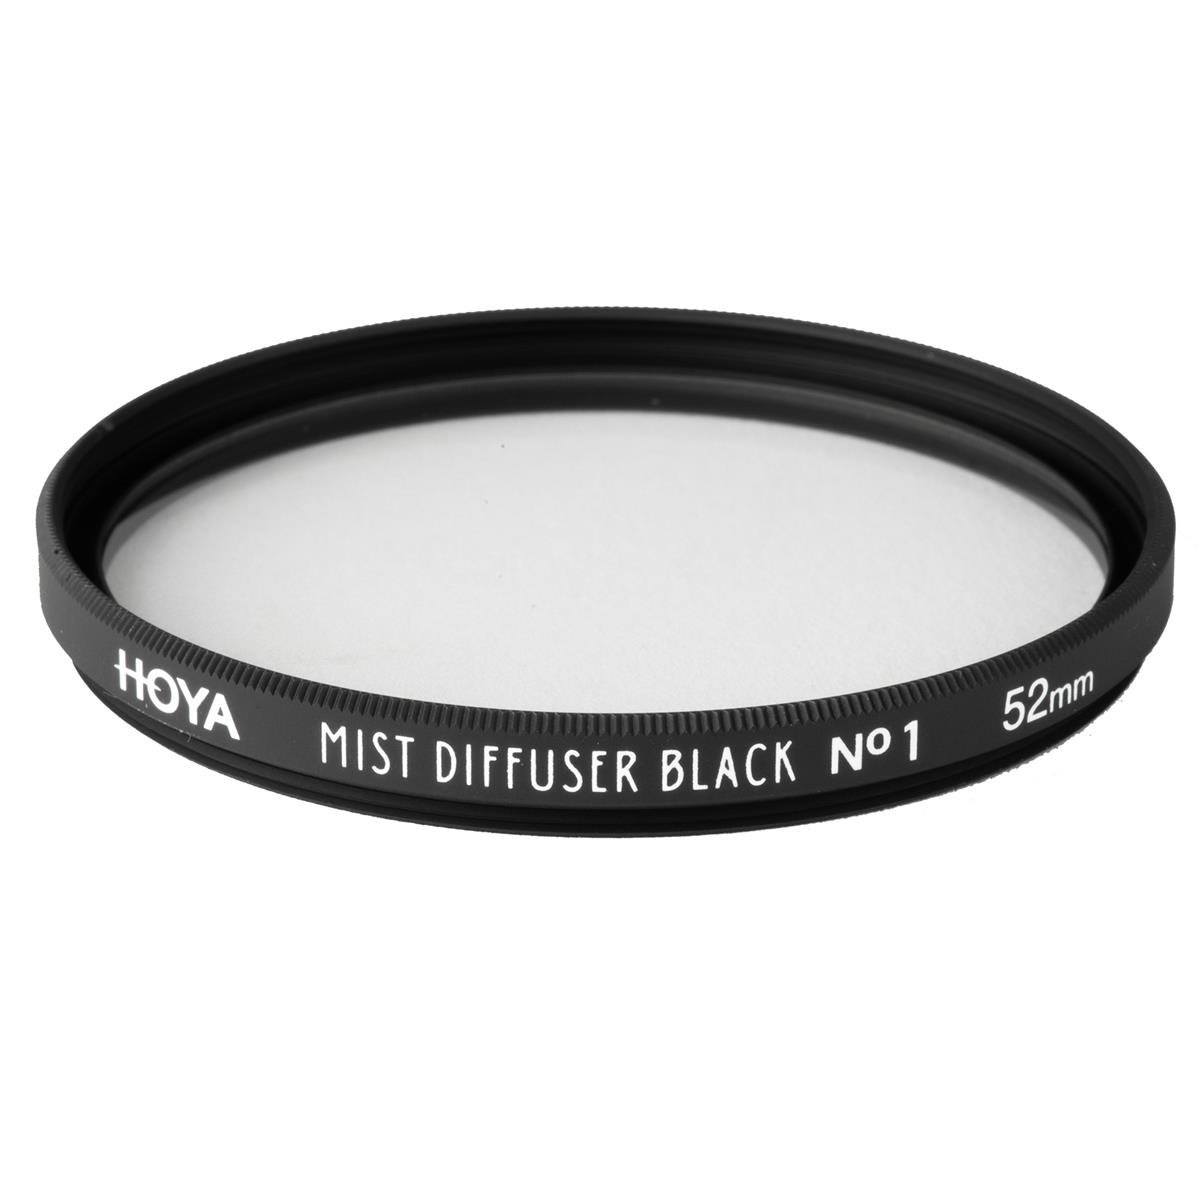 

Hoya 52mm Mist Diffuser Black No. 1 Glass Filter